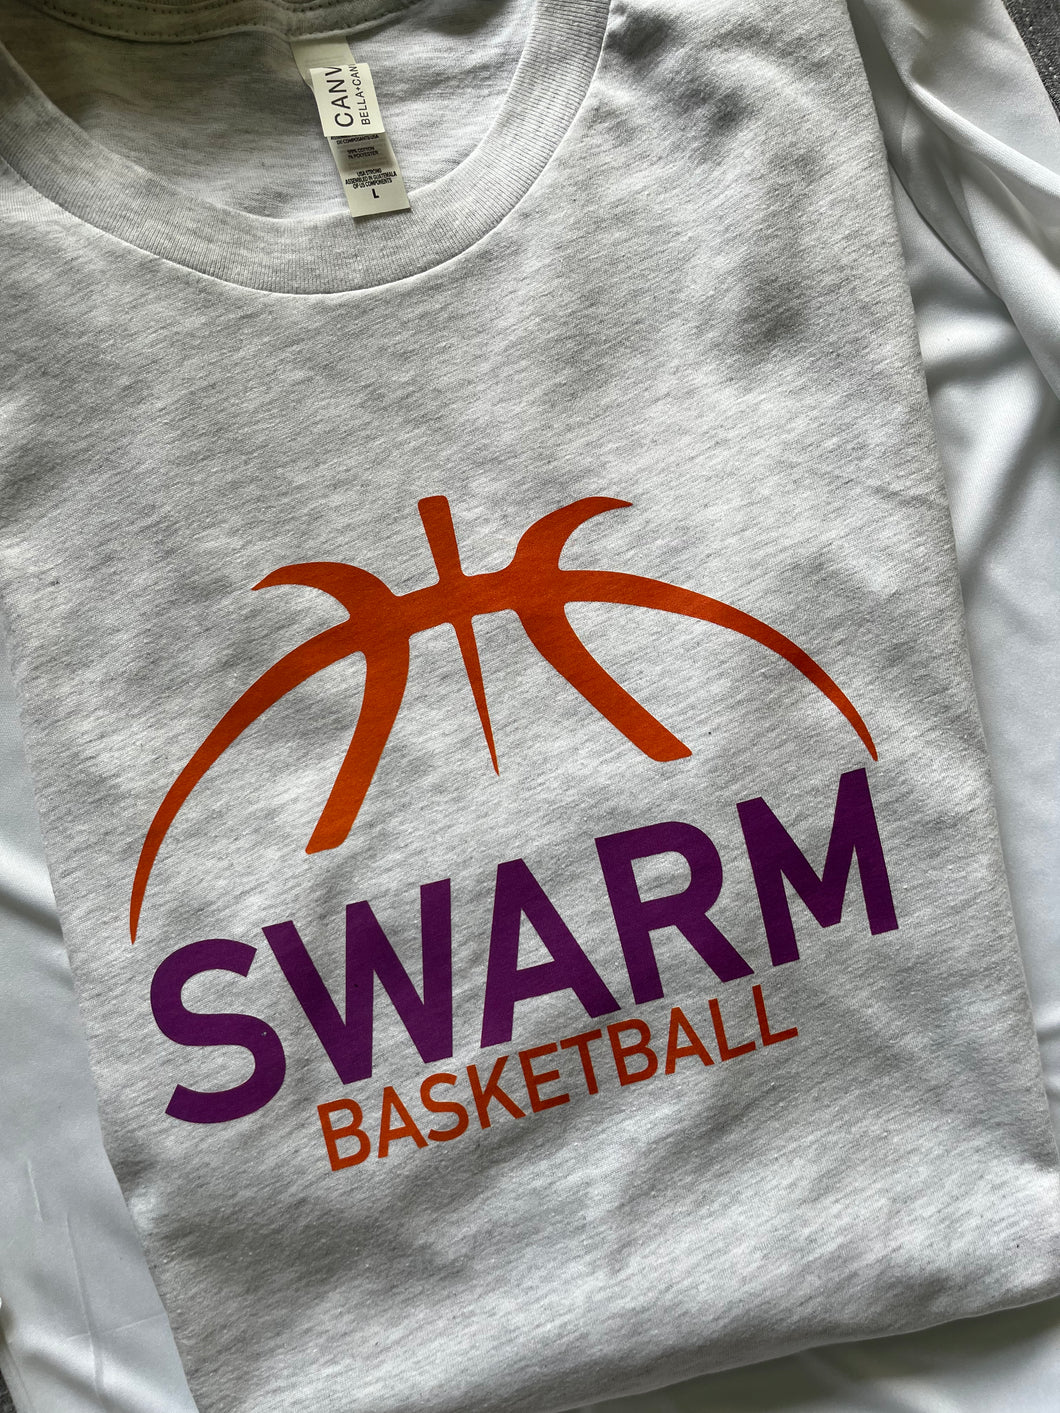 Swarm Basketball